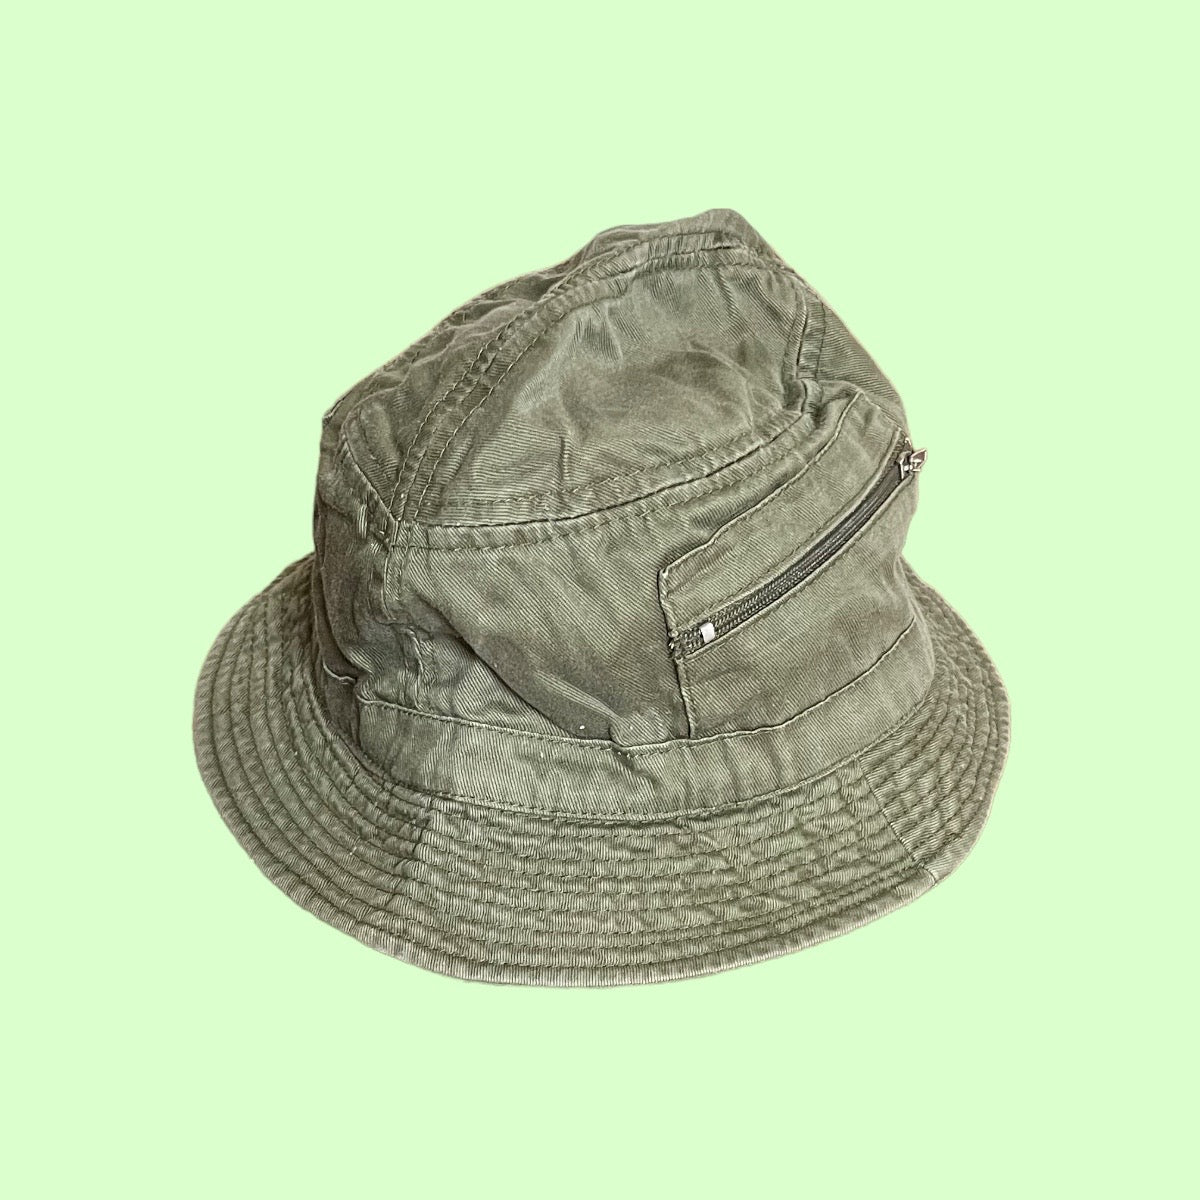 Vintage bucket hat